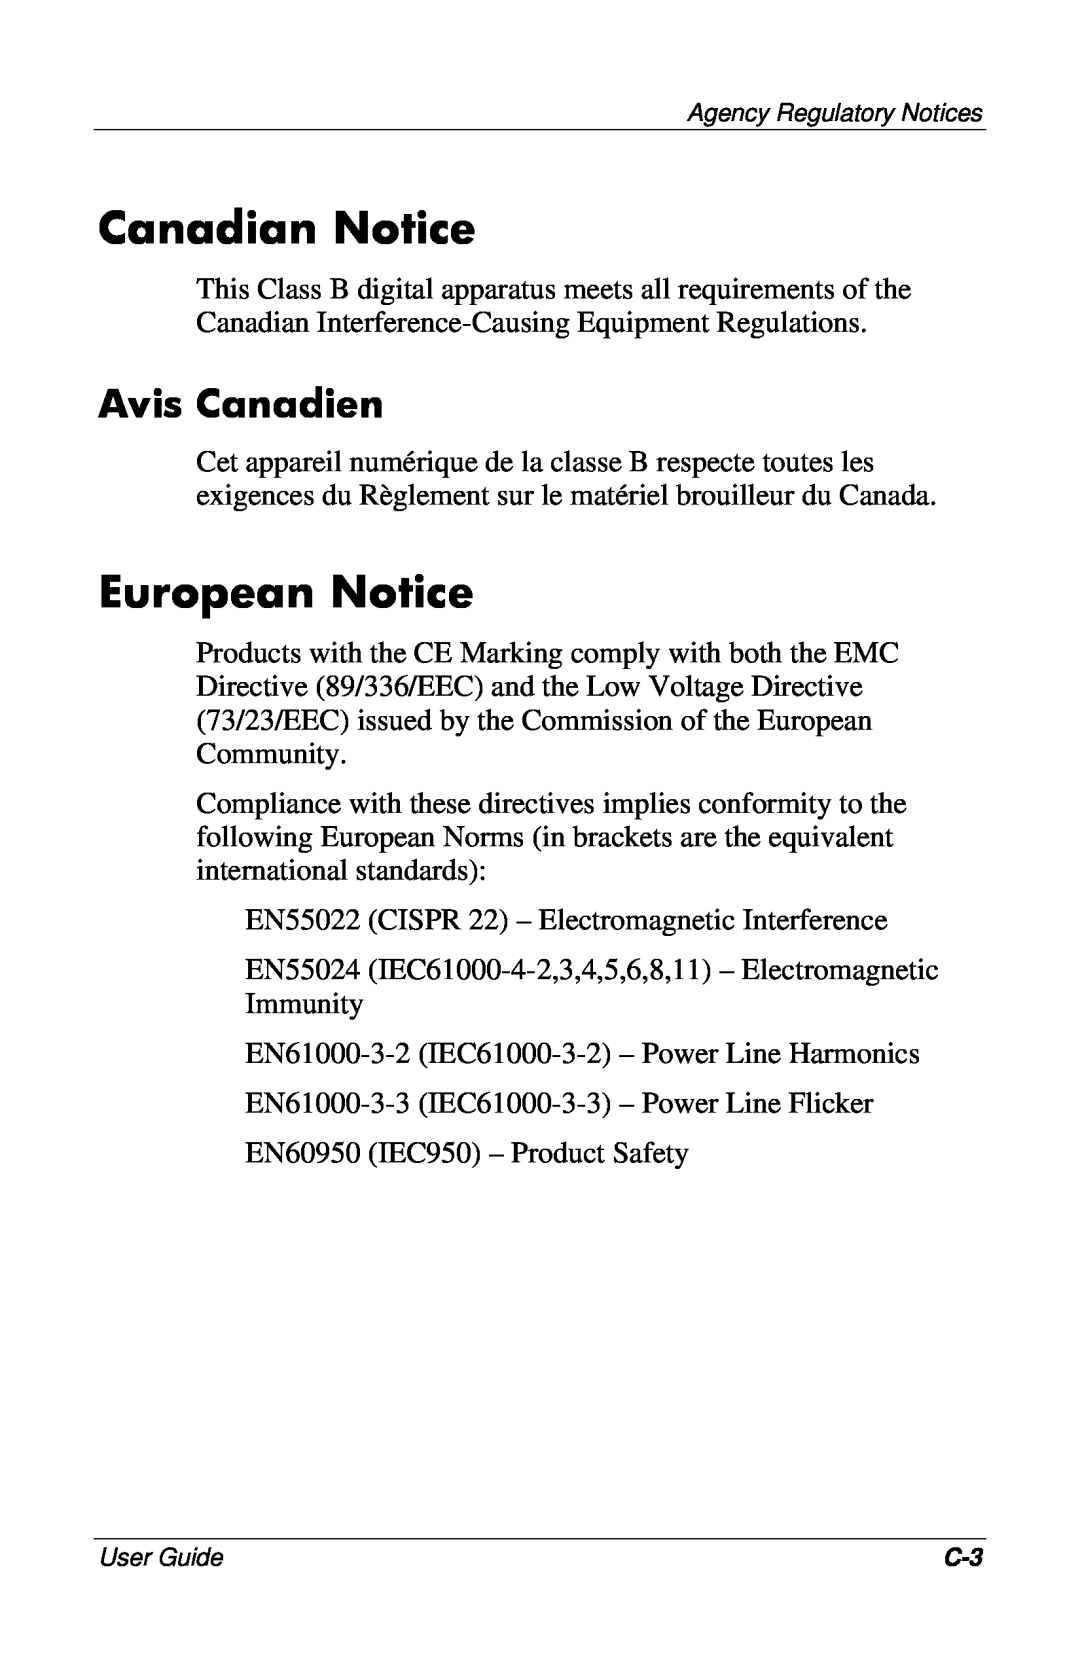 HP 5500, 7500, CRT, 9500, mx704, 7550 manual Canadian Notice, European Notice, Avis Canadien 